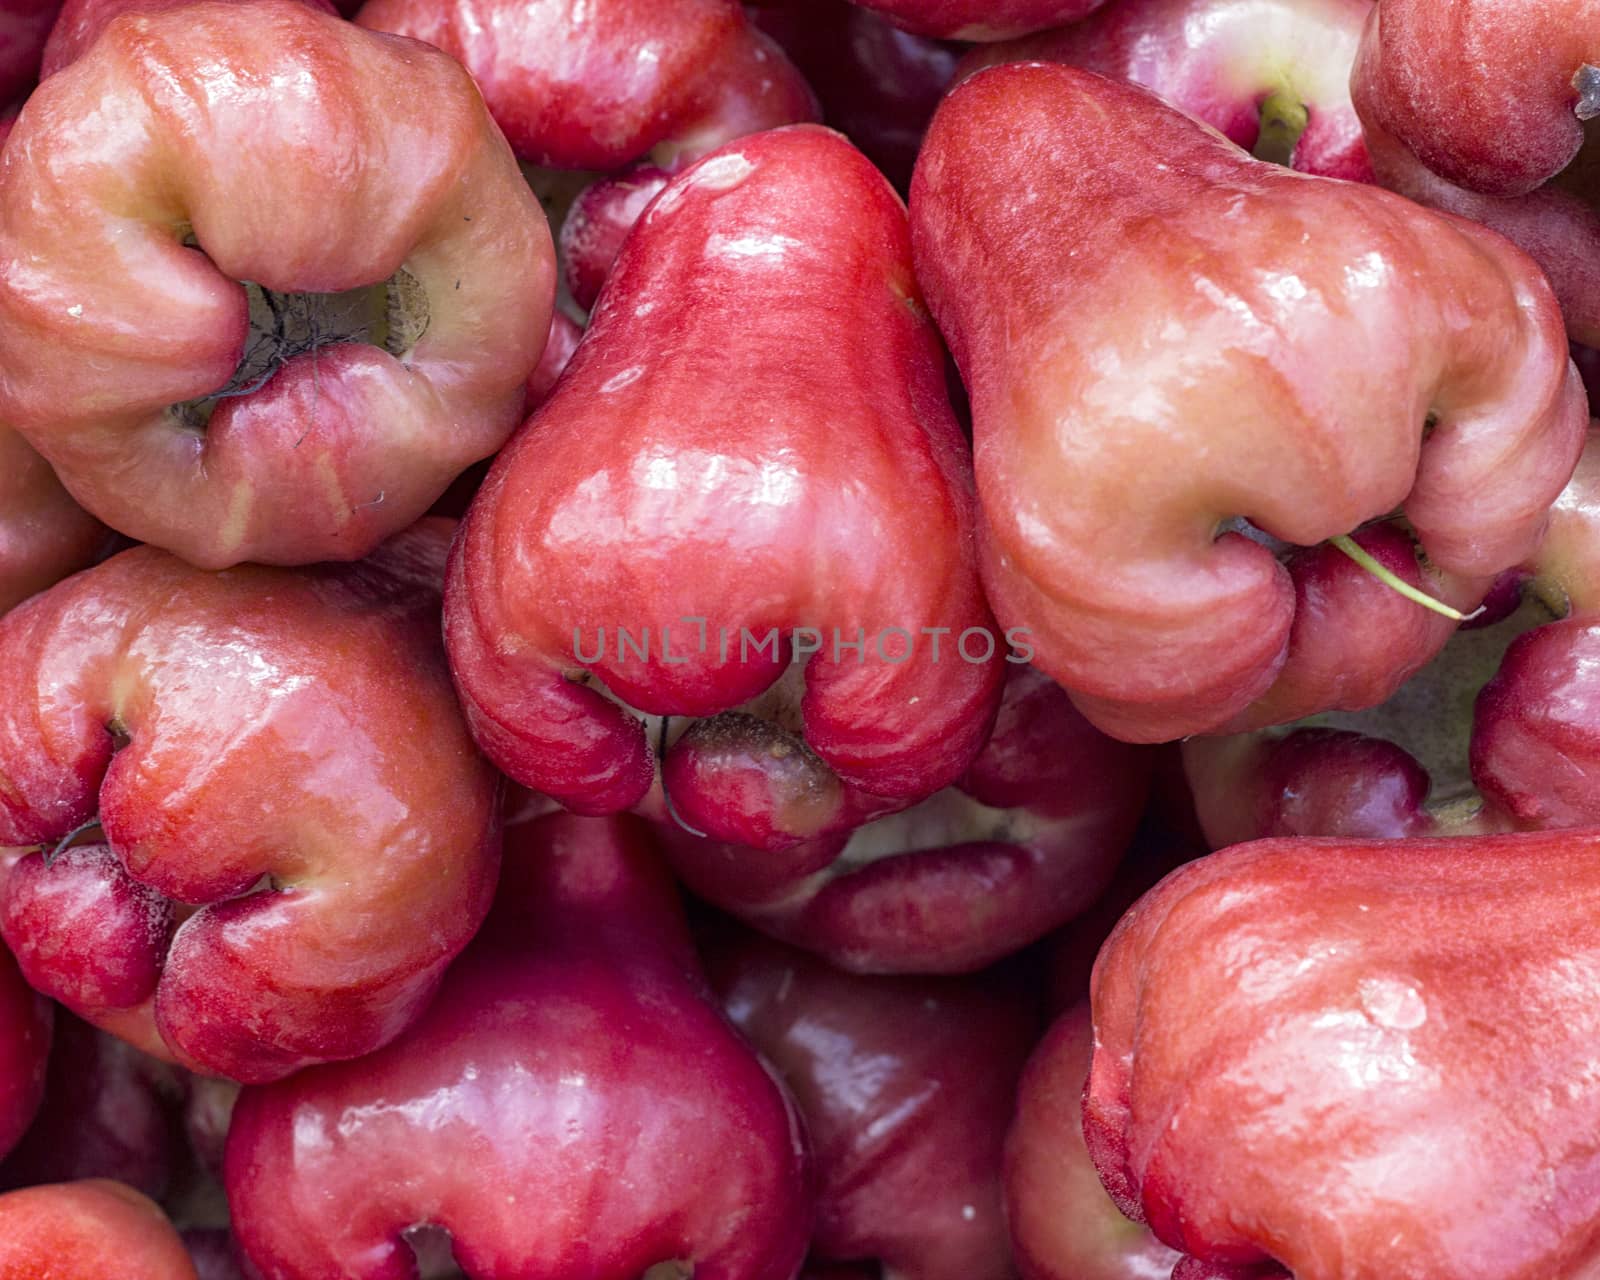 rose apples by khellon